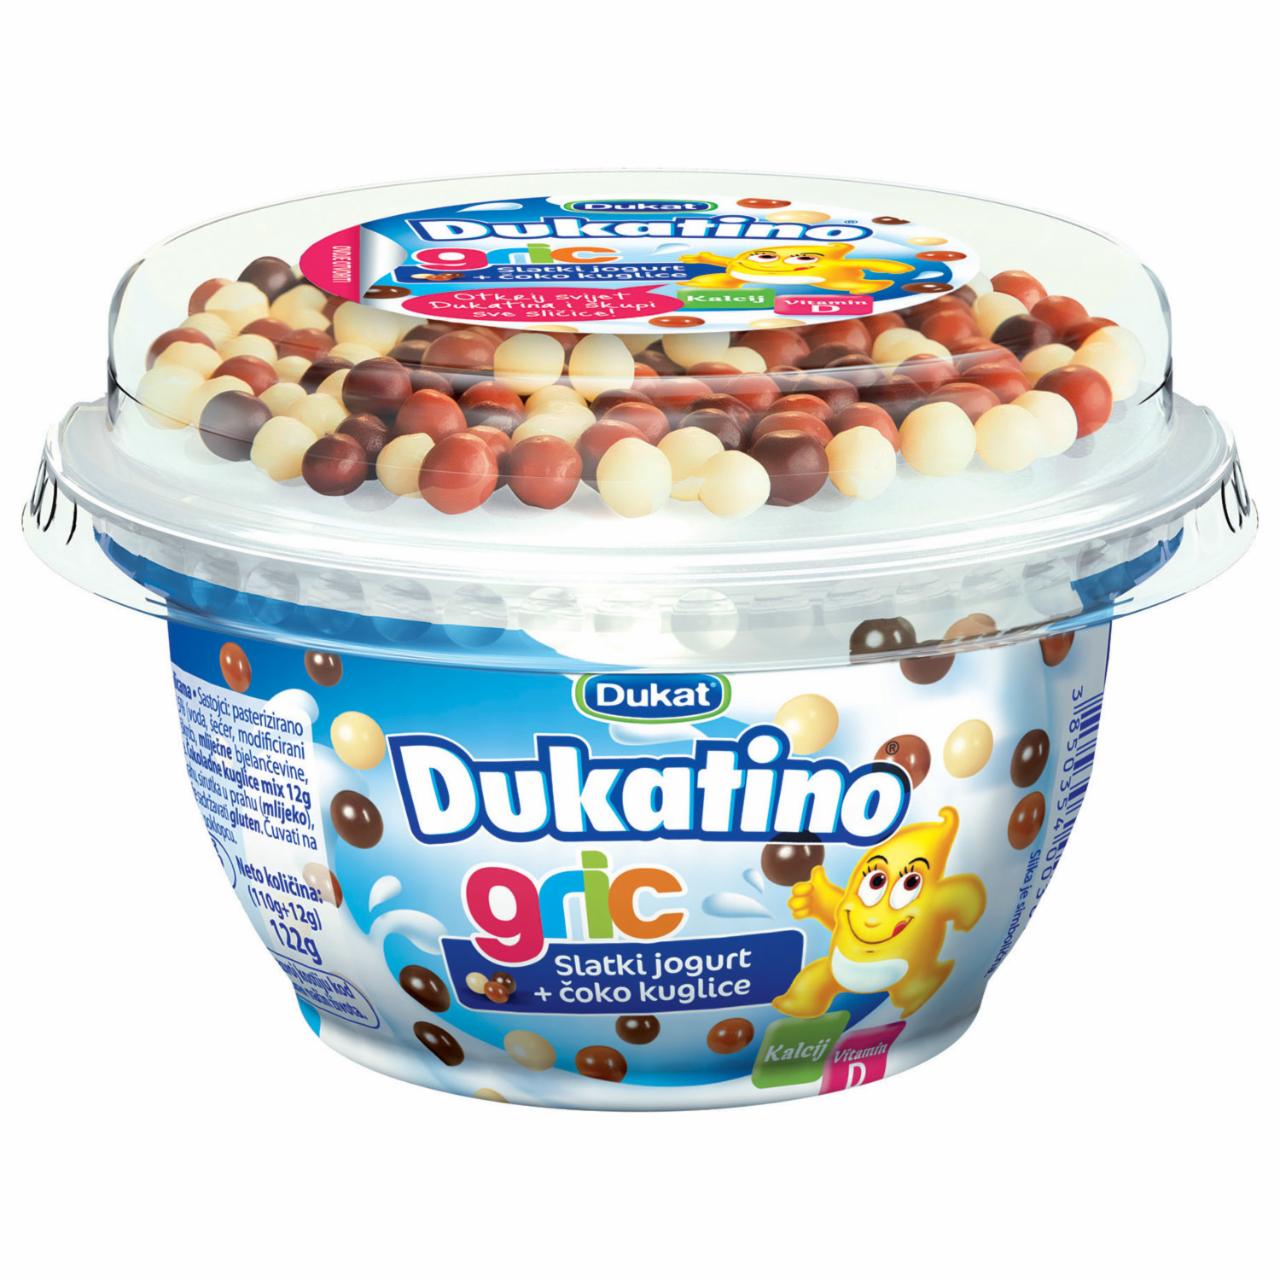 Fotografie - Dukatino Gric Slatki jogurt + čoko kuglice Dukat